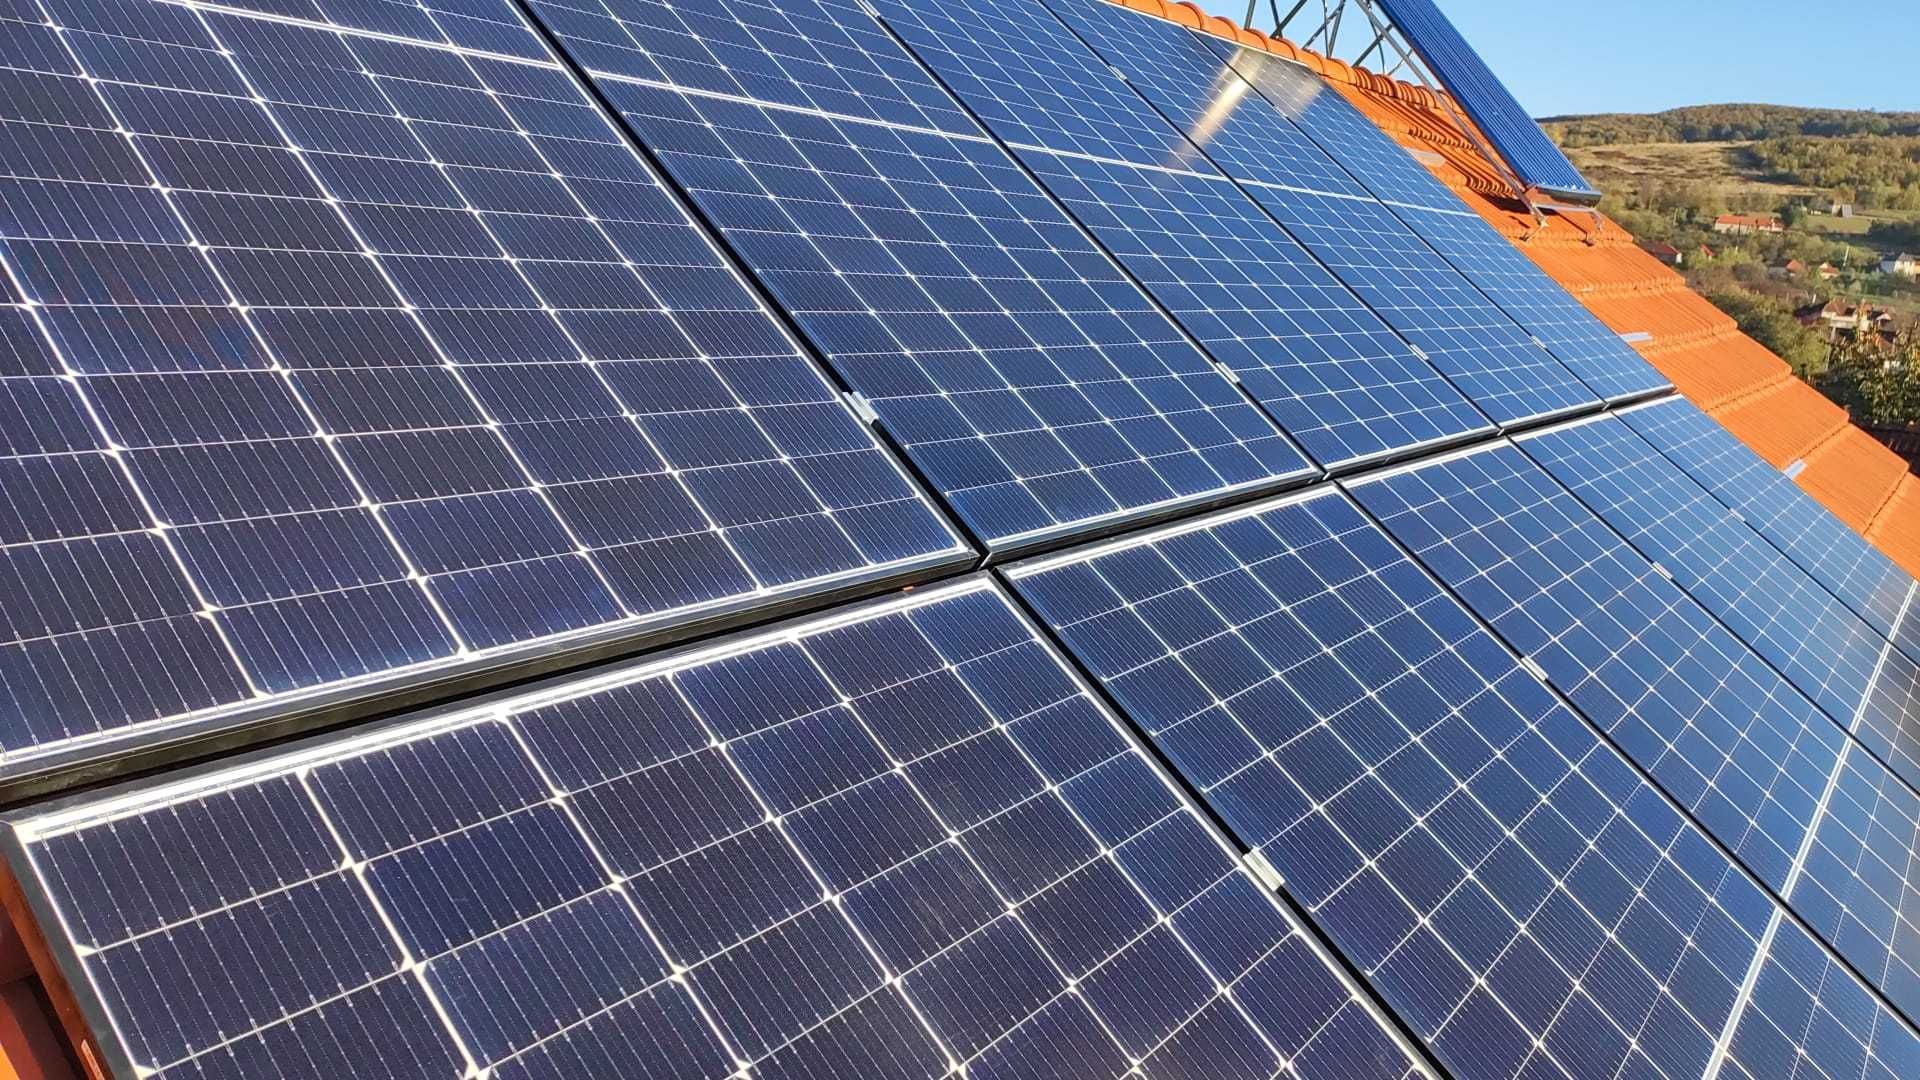 Sisteme panouri fotovoltaice, preturi minime/kw, autorizat ANRE